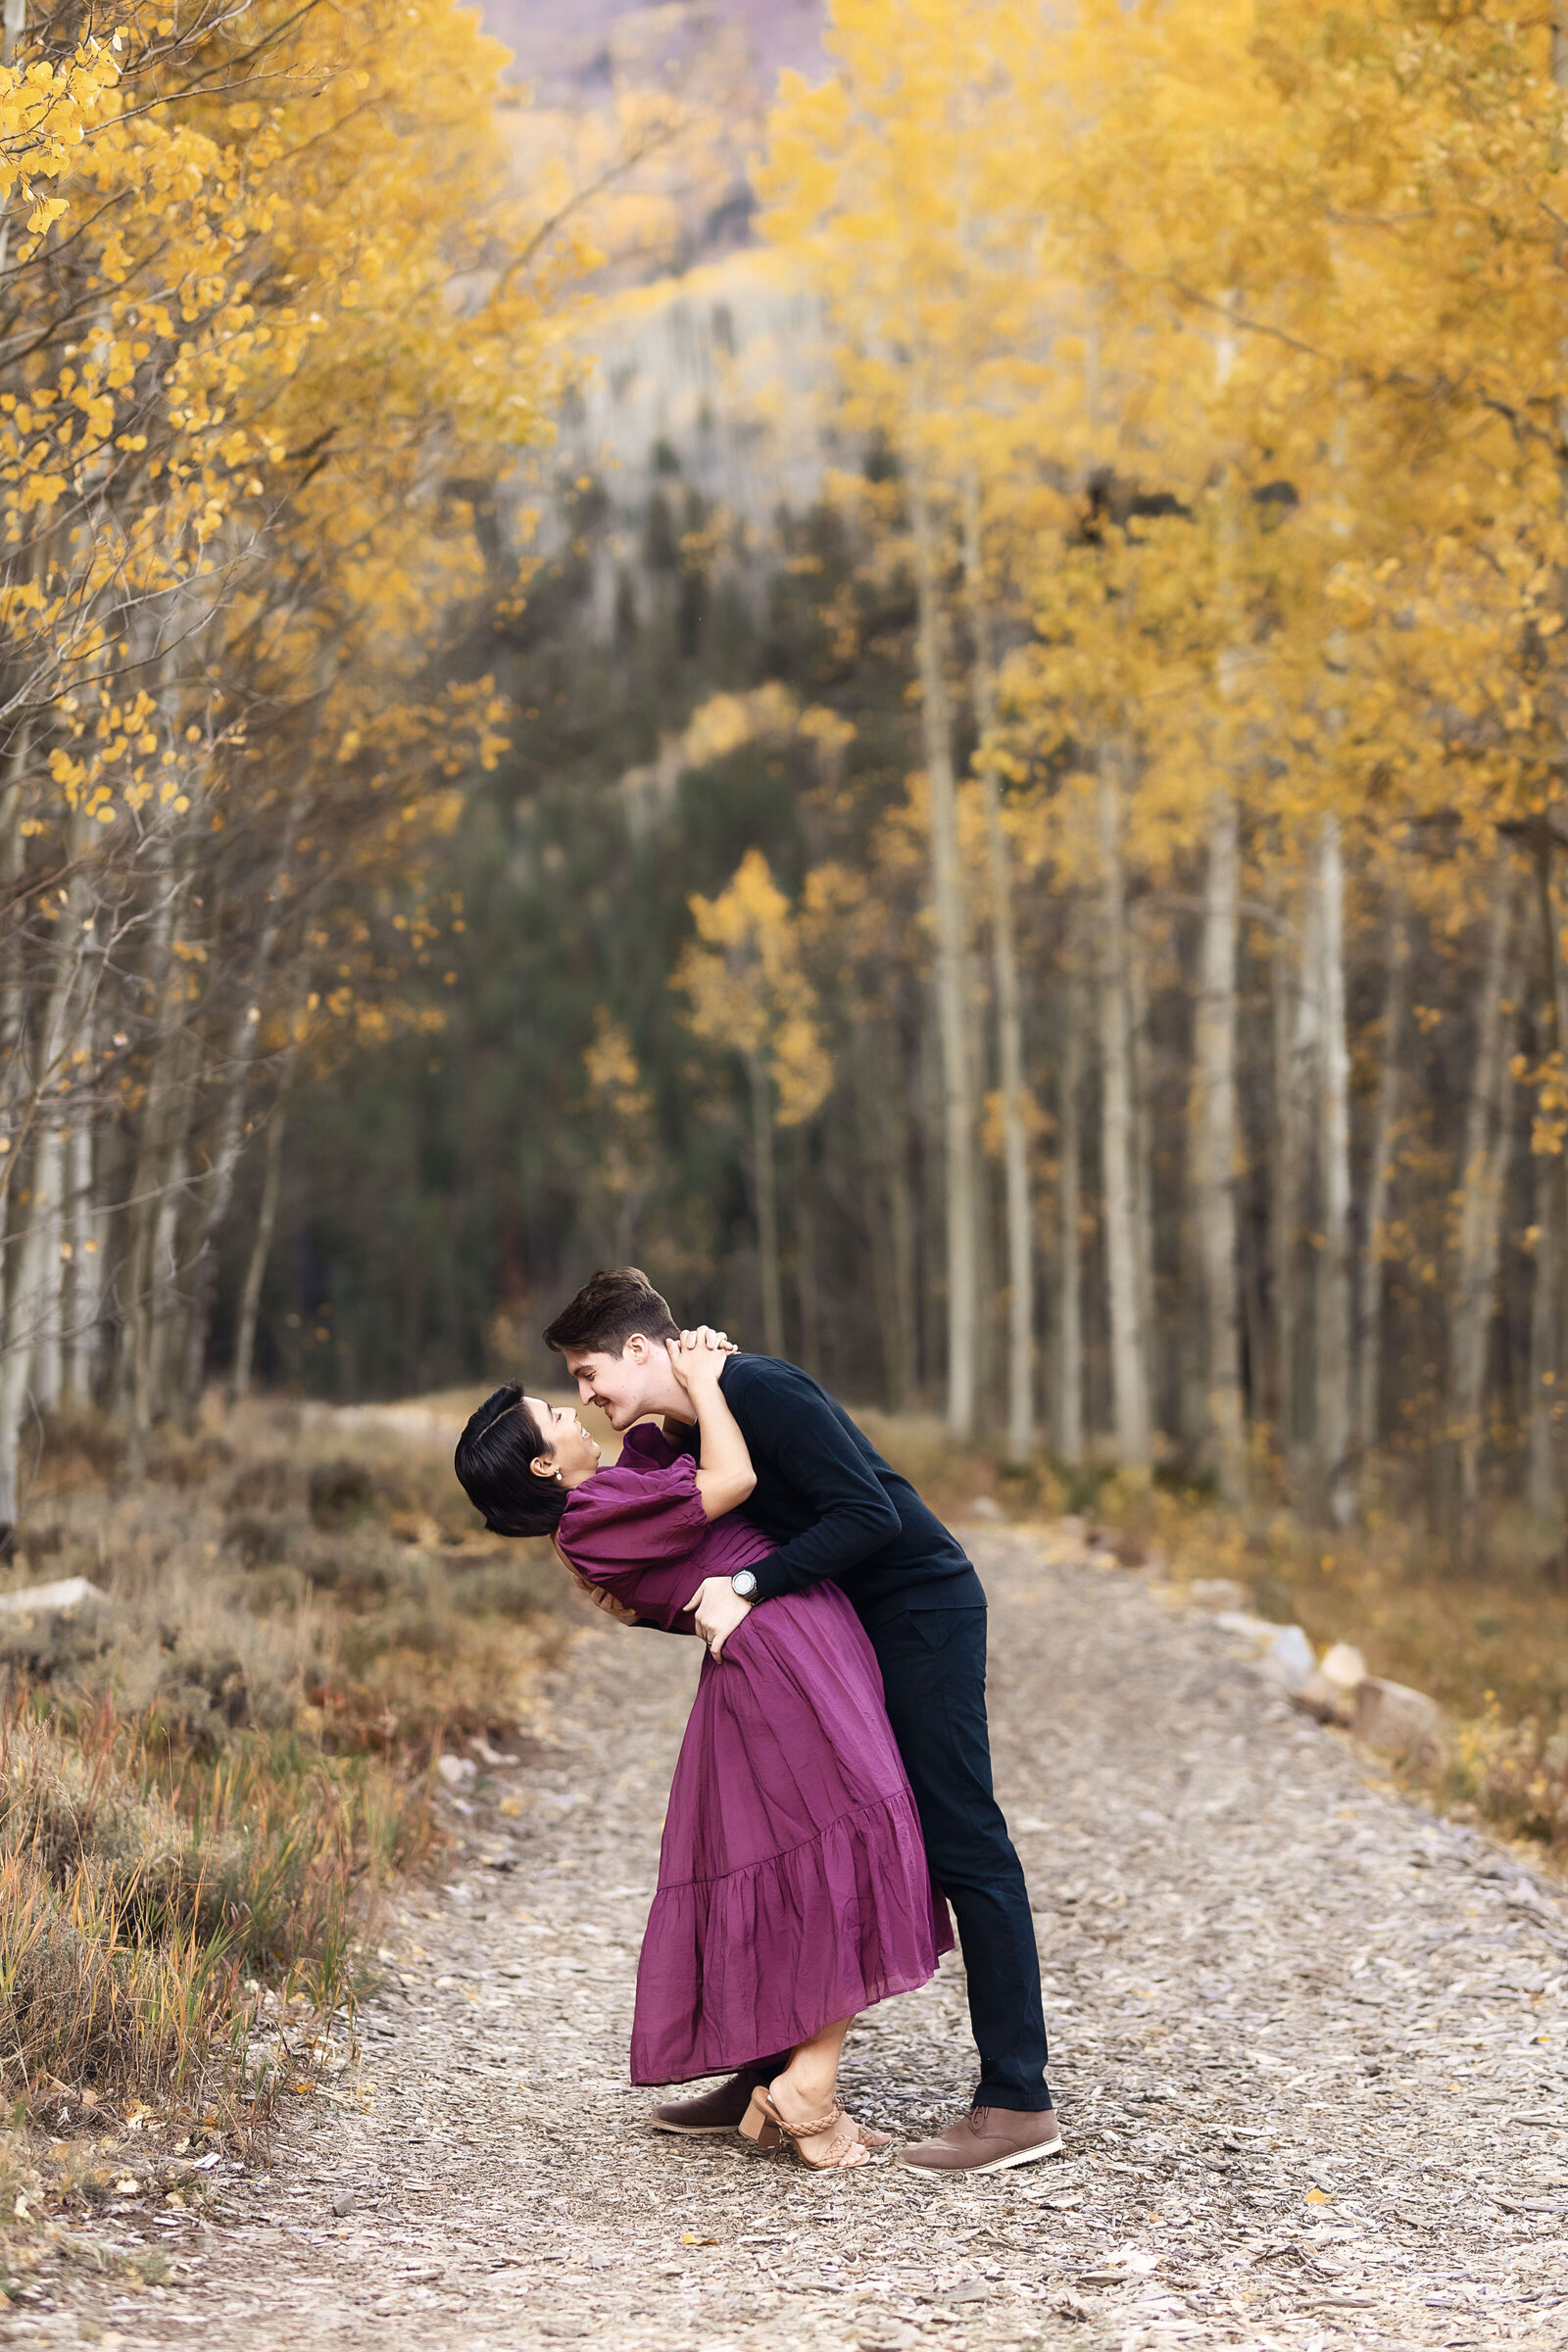 A man dips his fiance in a romantic aspen grove fall setting.